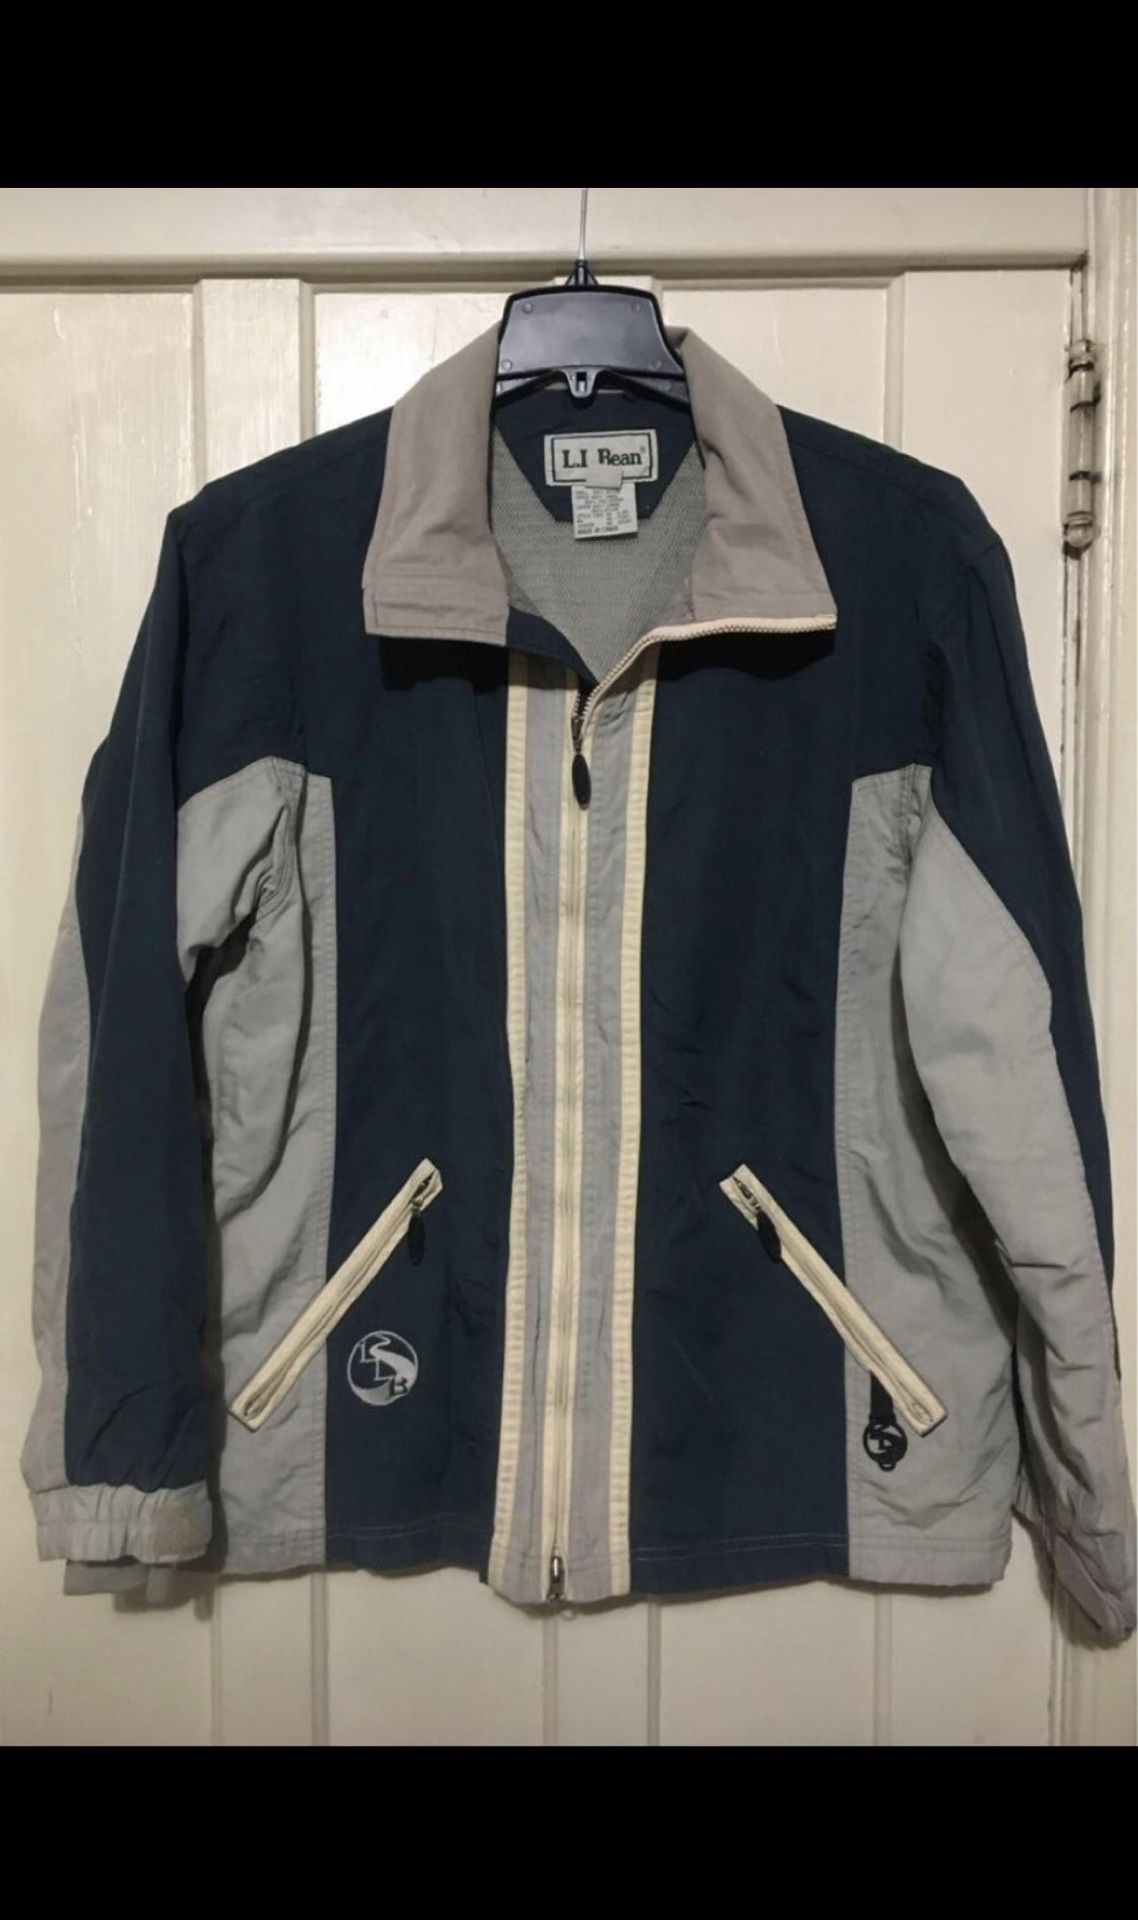 Vintage LLBEAN MENS jacket size M